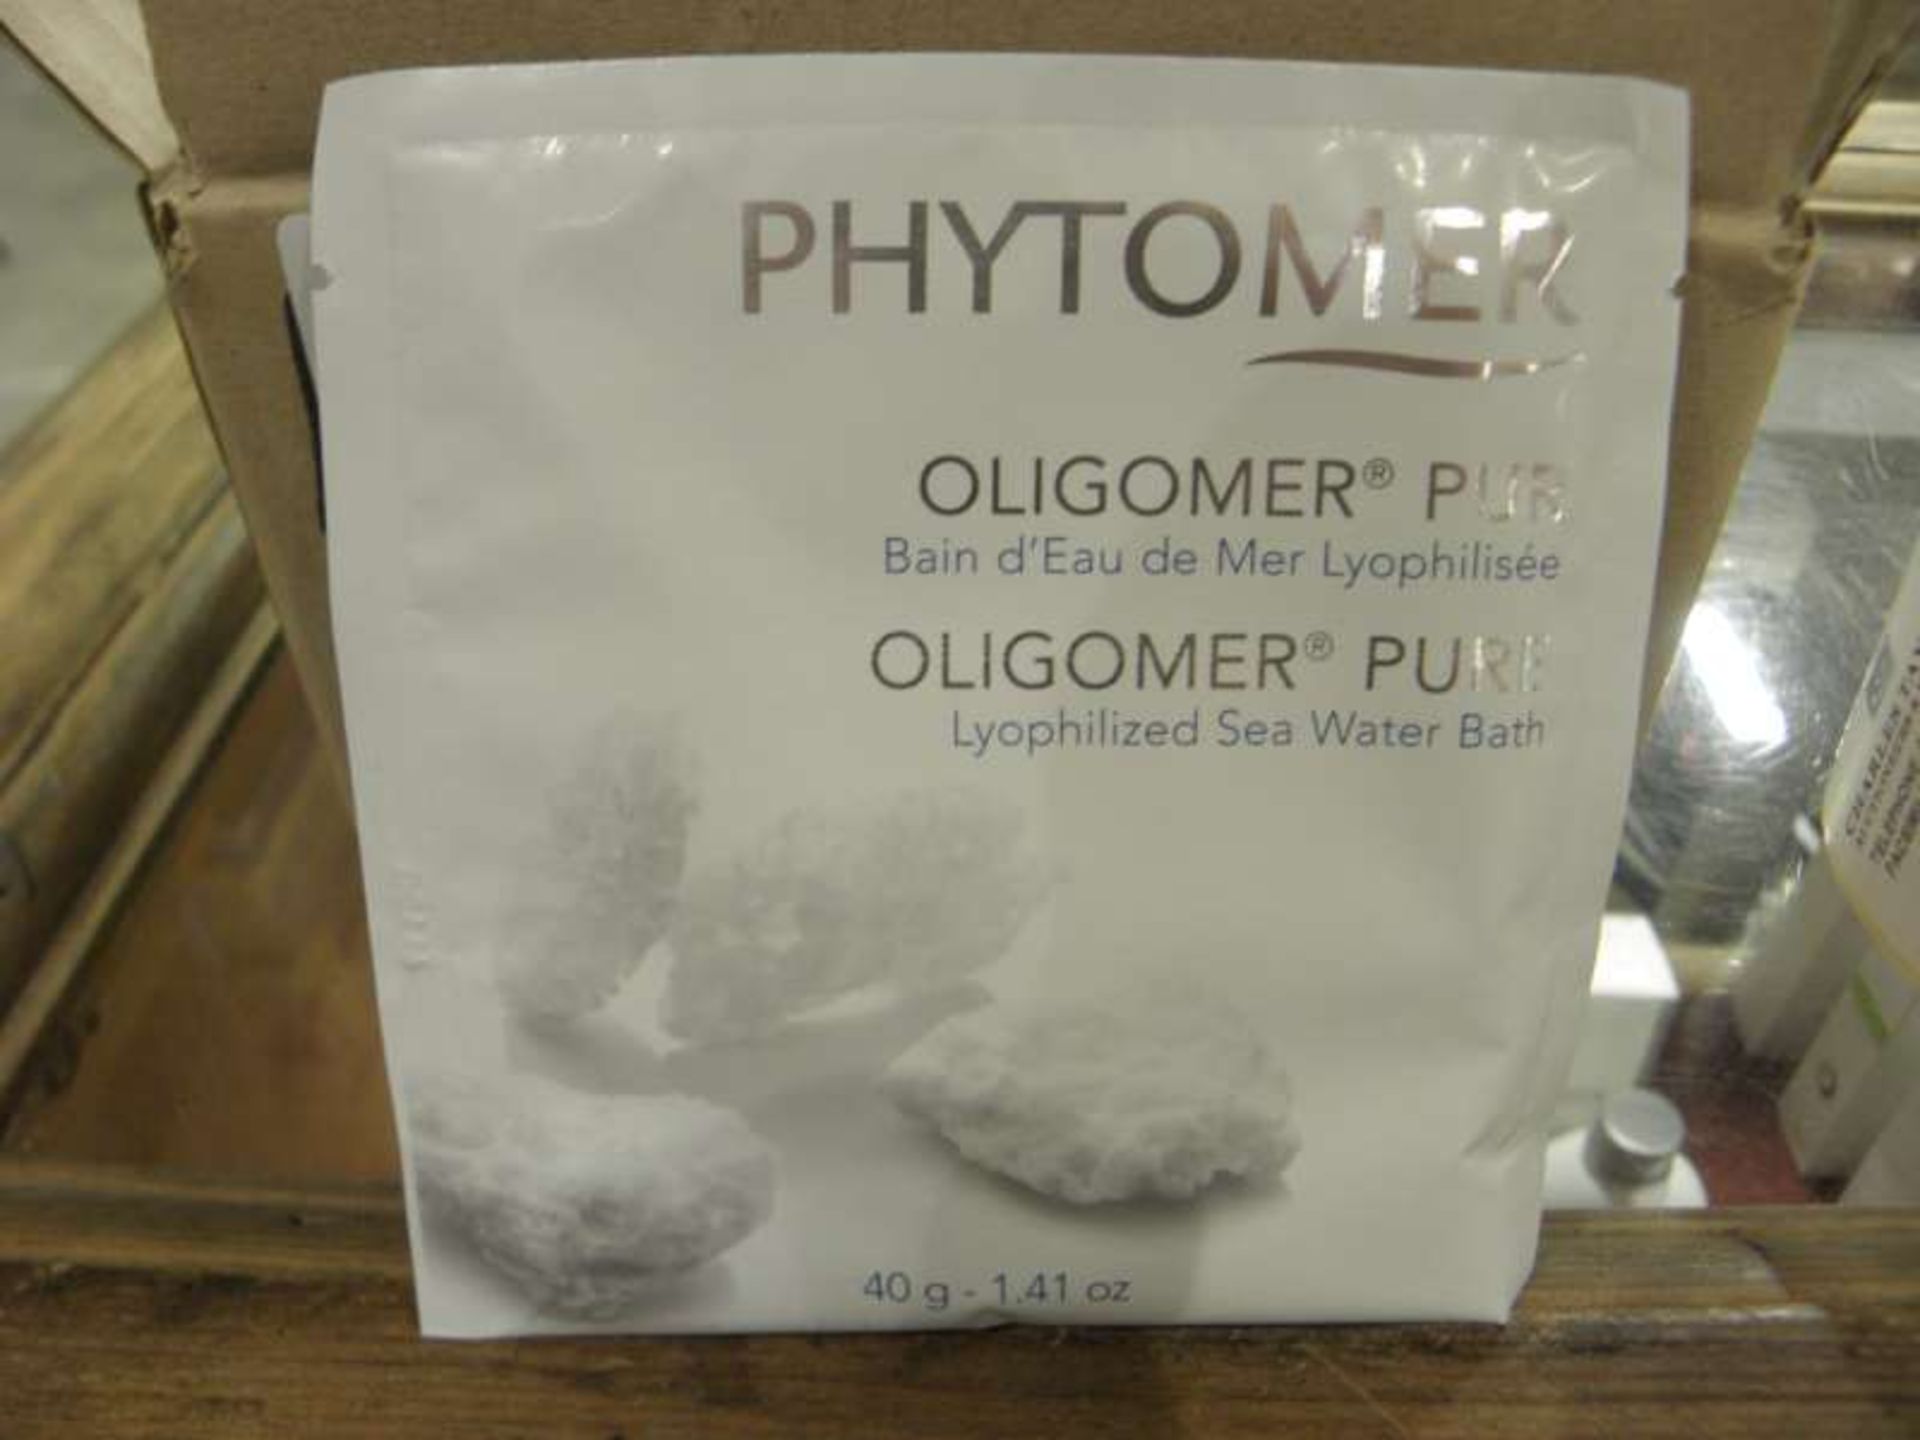 20 X 40 G PACKS OF PHYTOMER OLIGOMER PURE LYOPHILIZED SEA WATER BATH IN 1 BOX